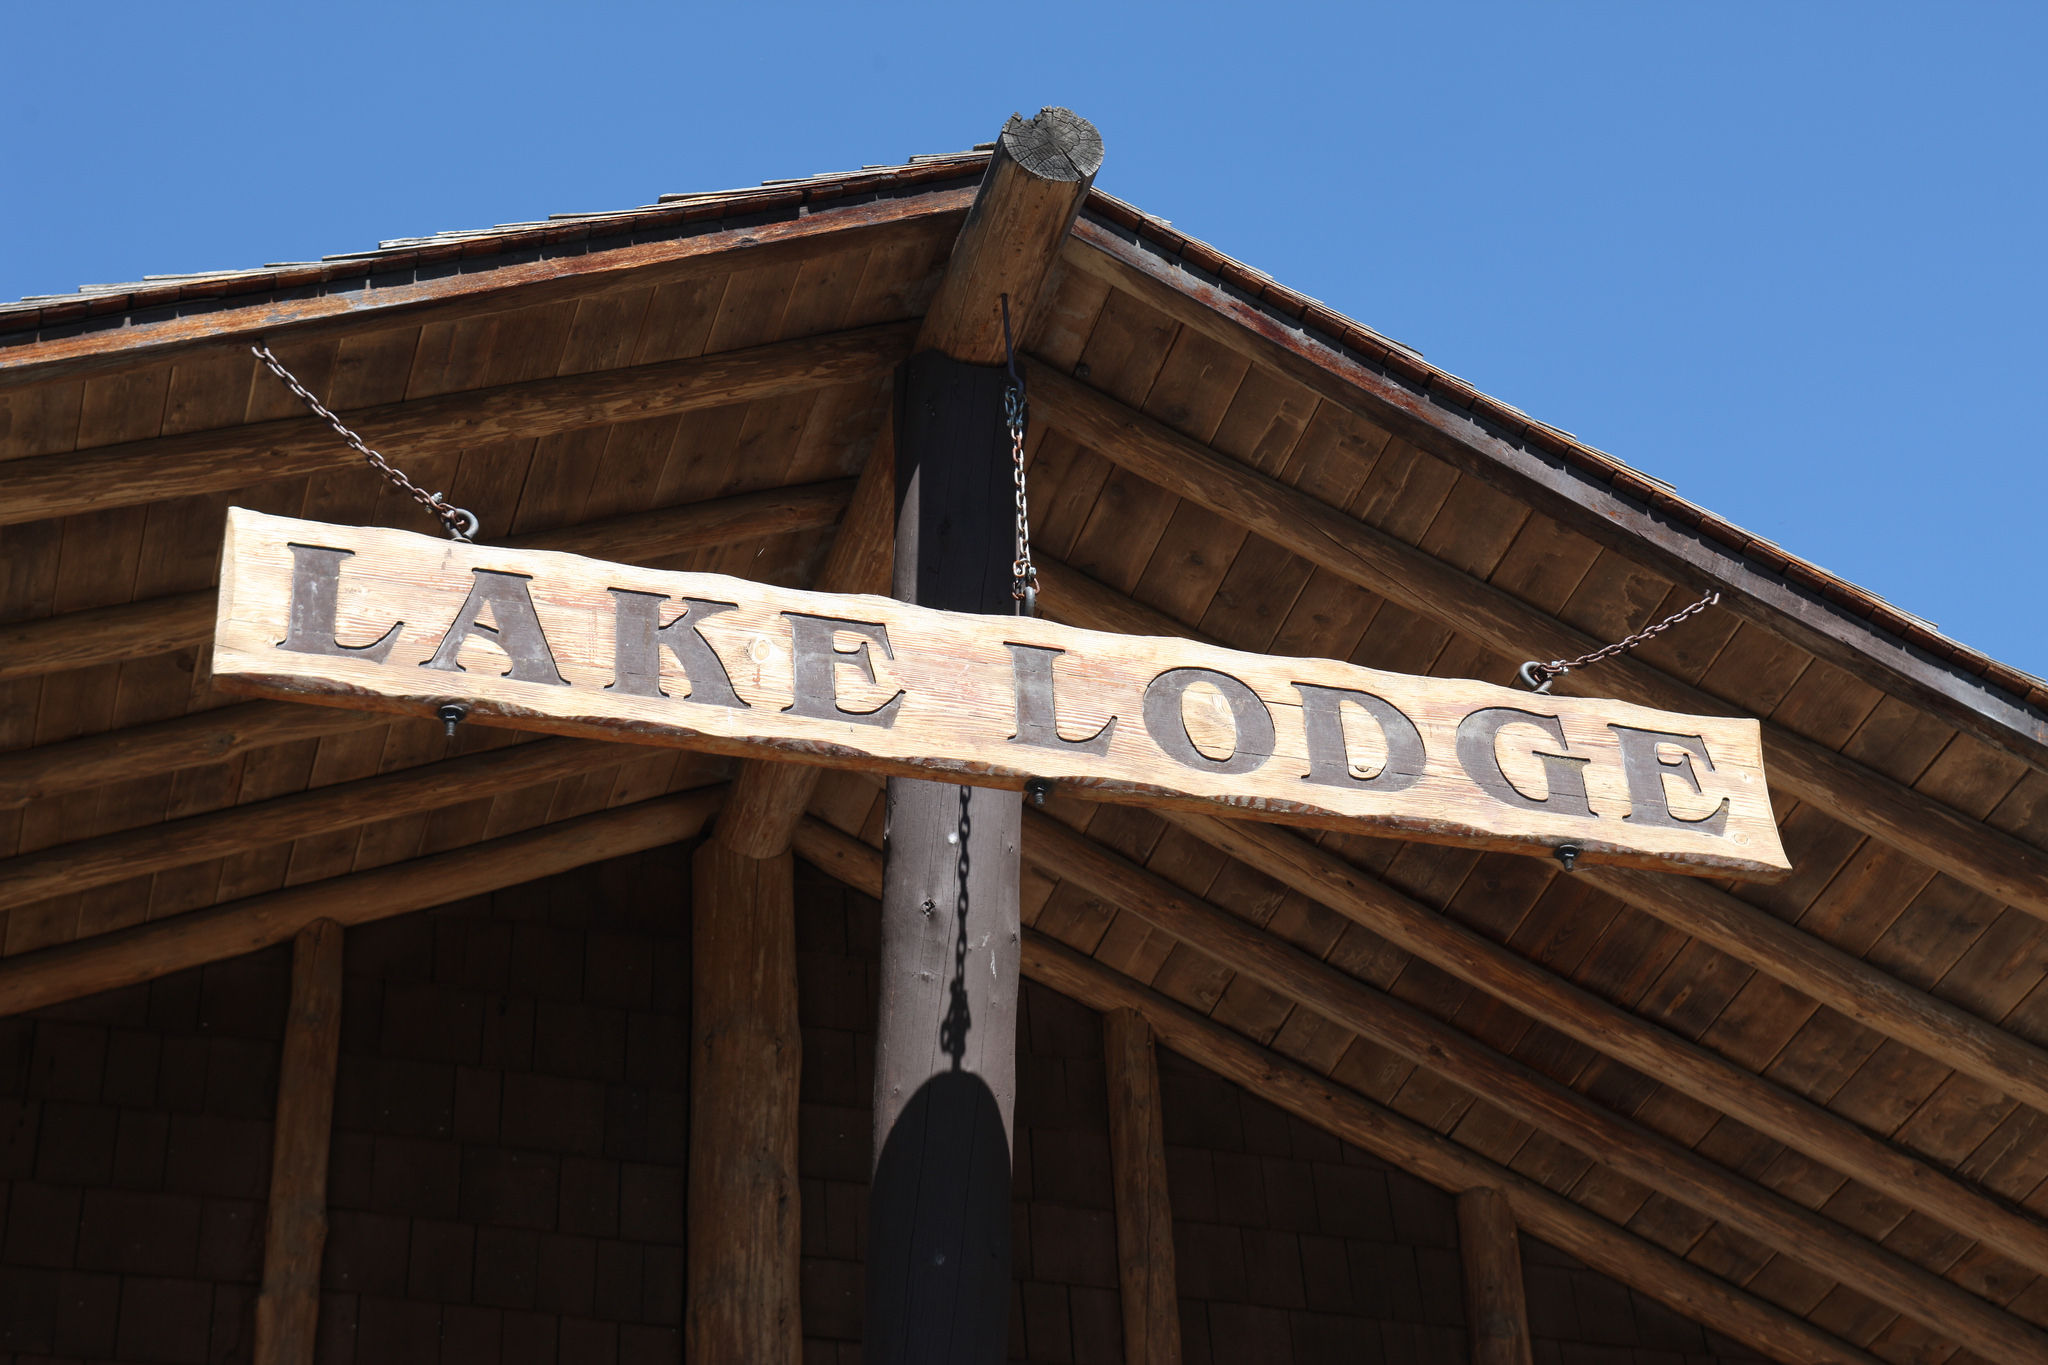 http://yellowstoneinsider.com/wp-content/uploads/2016/05/lake-lodge-sign-2013.jpg